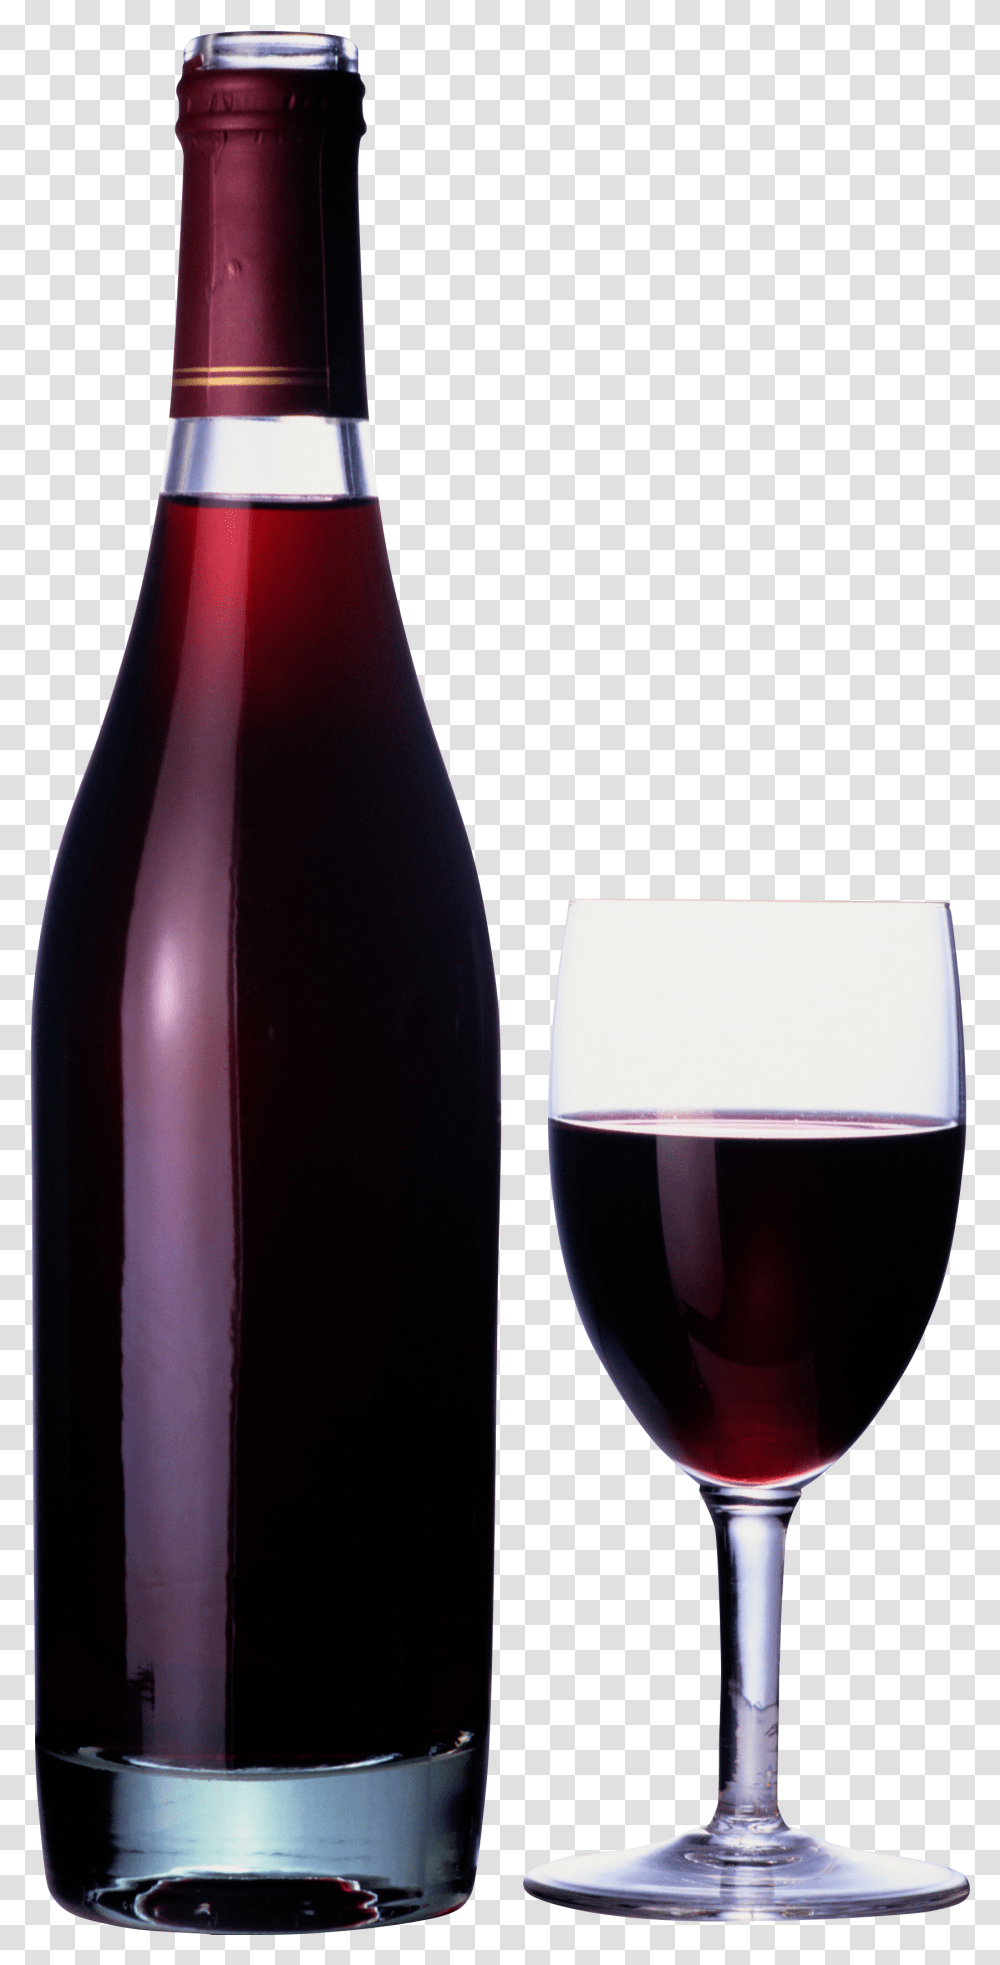 Wine Bottle And Glass Background Wine Bottle, Alcohol, Beverage, Drink, Red Wine Transparent Png